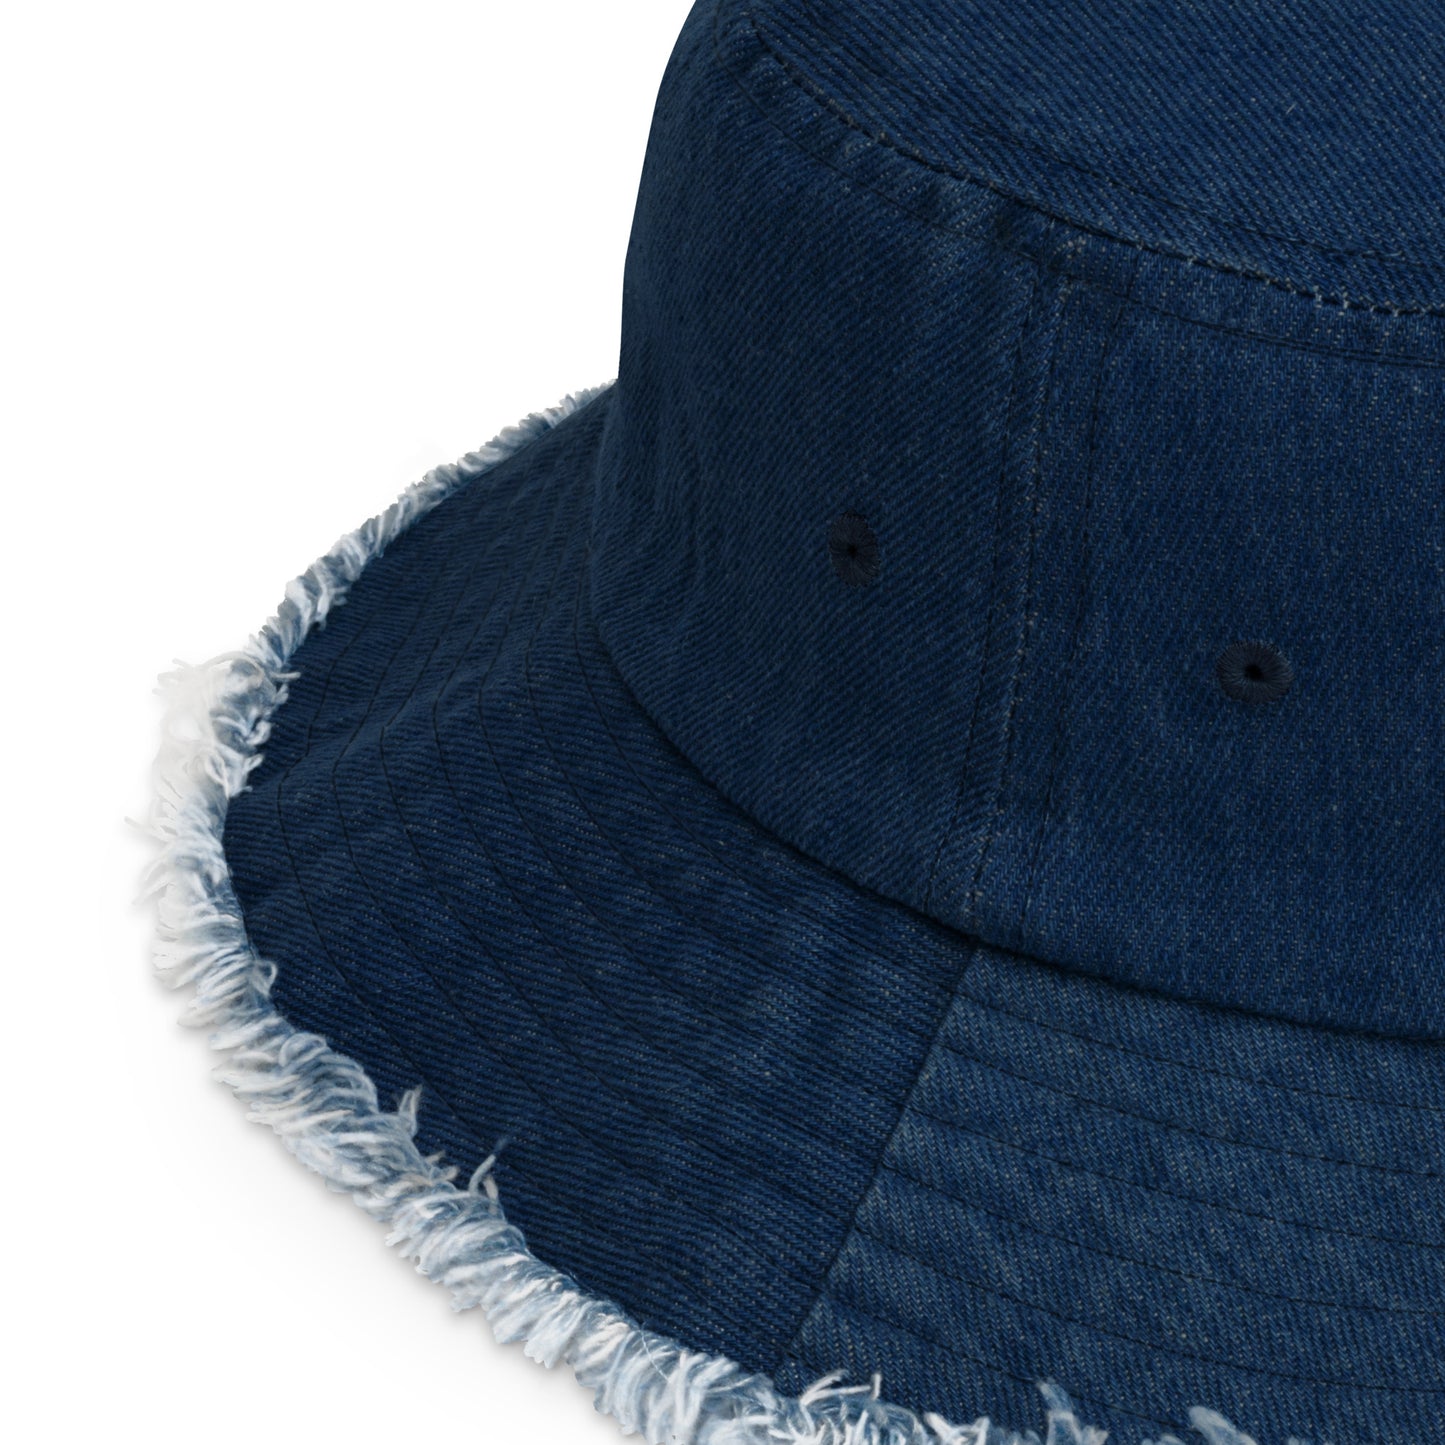 Y007 - Damaged denim bucket hat (Navy)